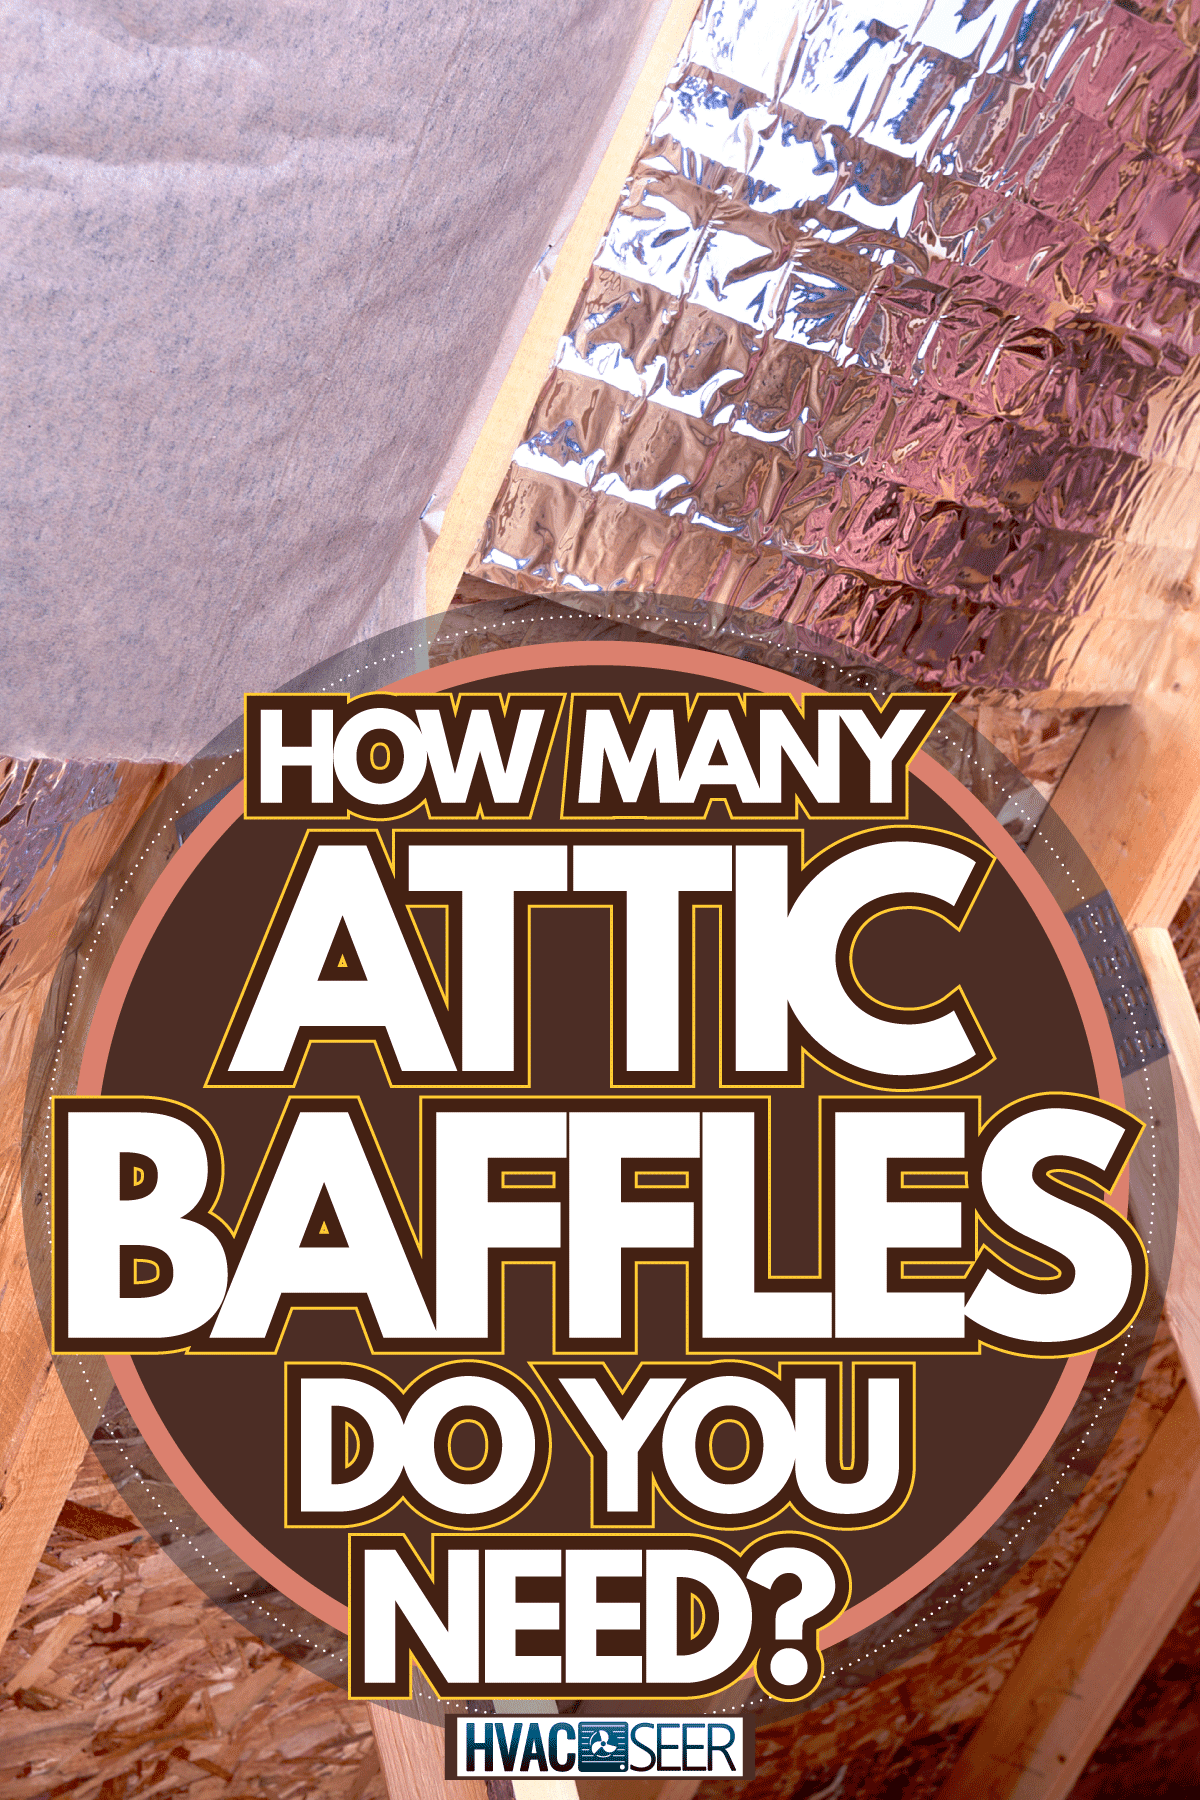 Baffles insulation located in attic, How Many Attic Baffles Do You Need?